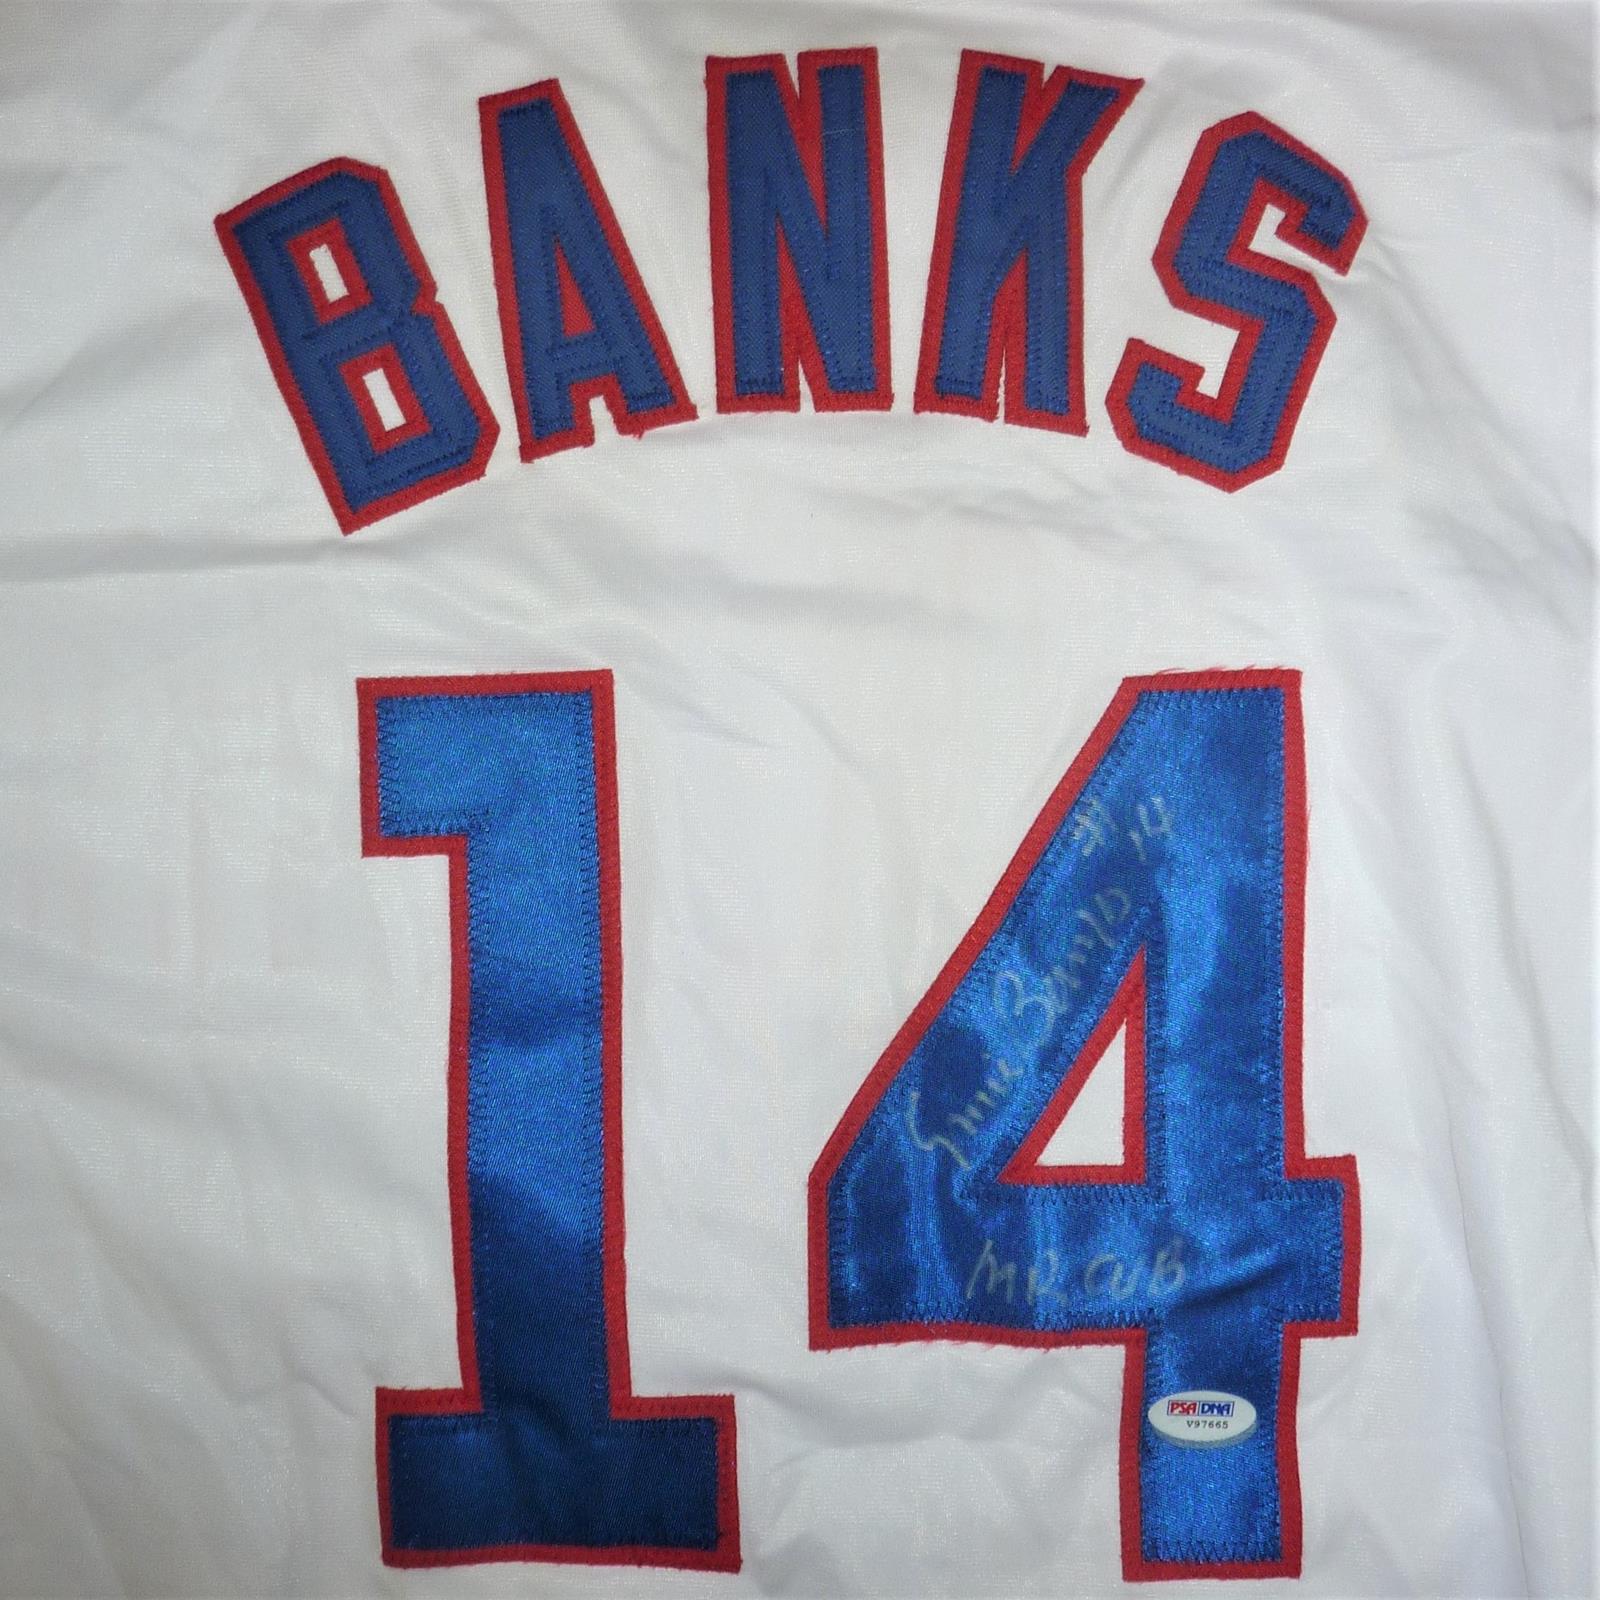 Ernie Banks Autographed Chicago Cubs (White #14) Jersey – PSADNA – Palm  Beach Autographs LLC